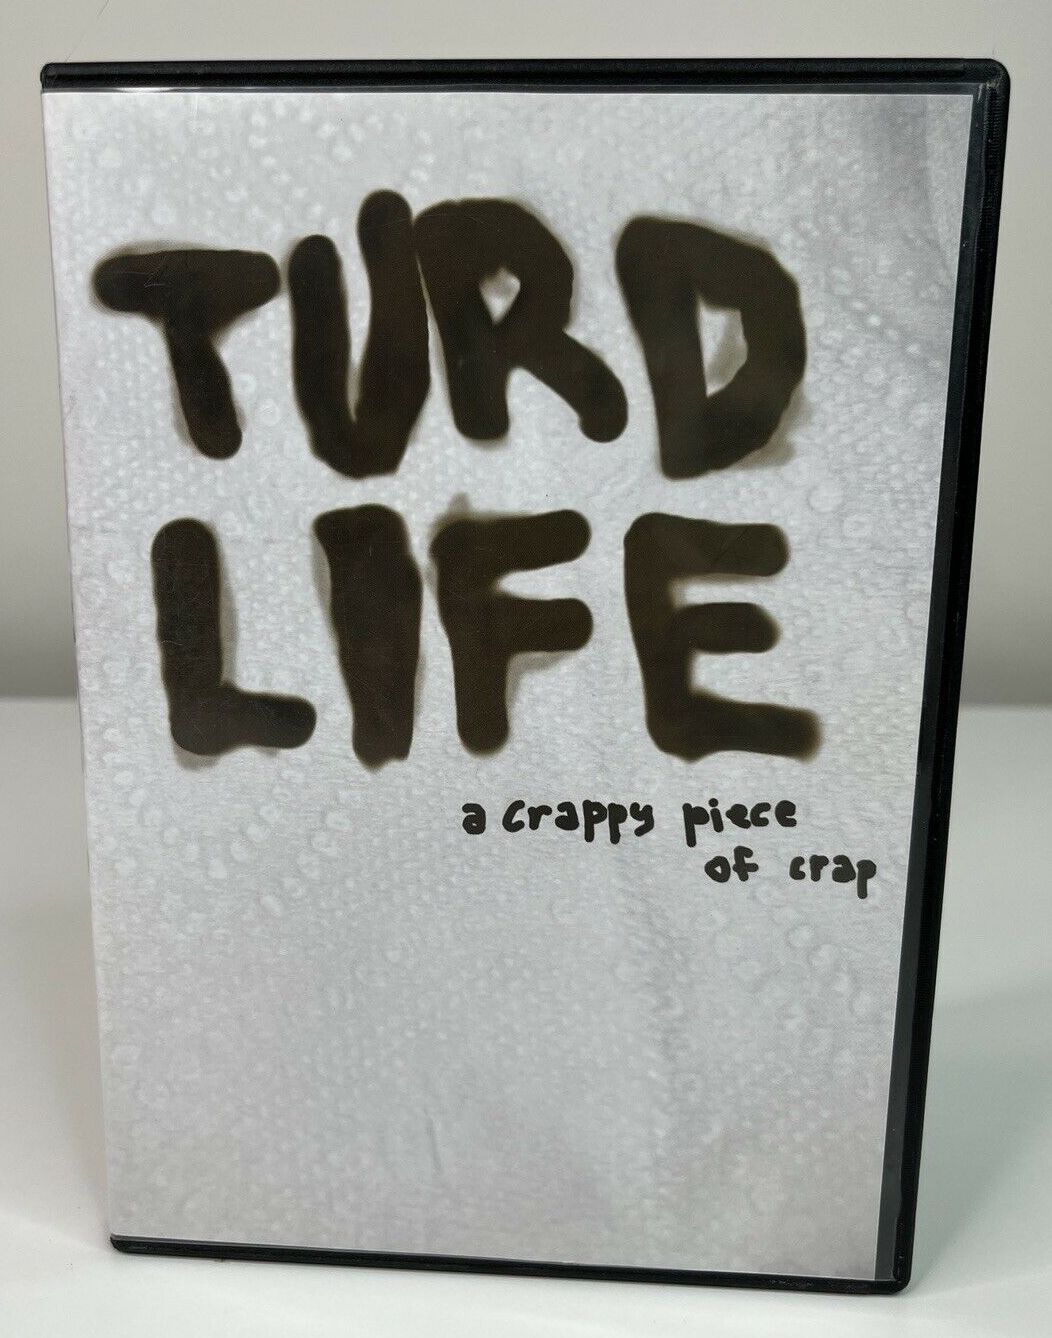 Turd Life cover art